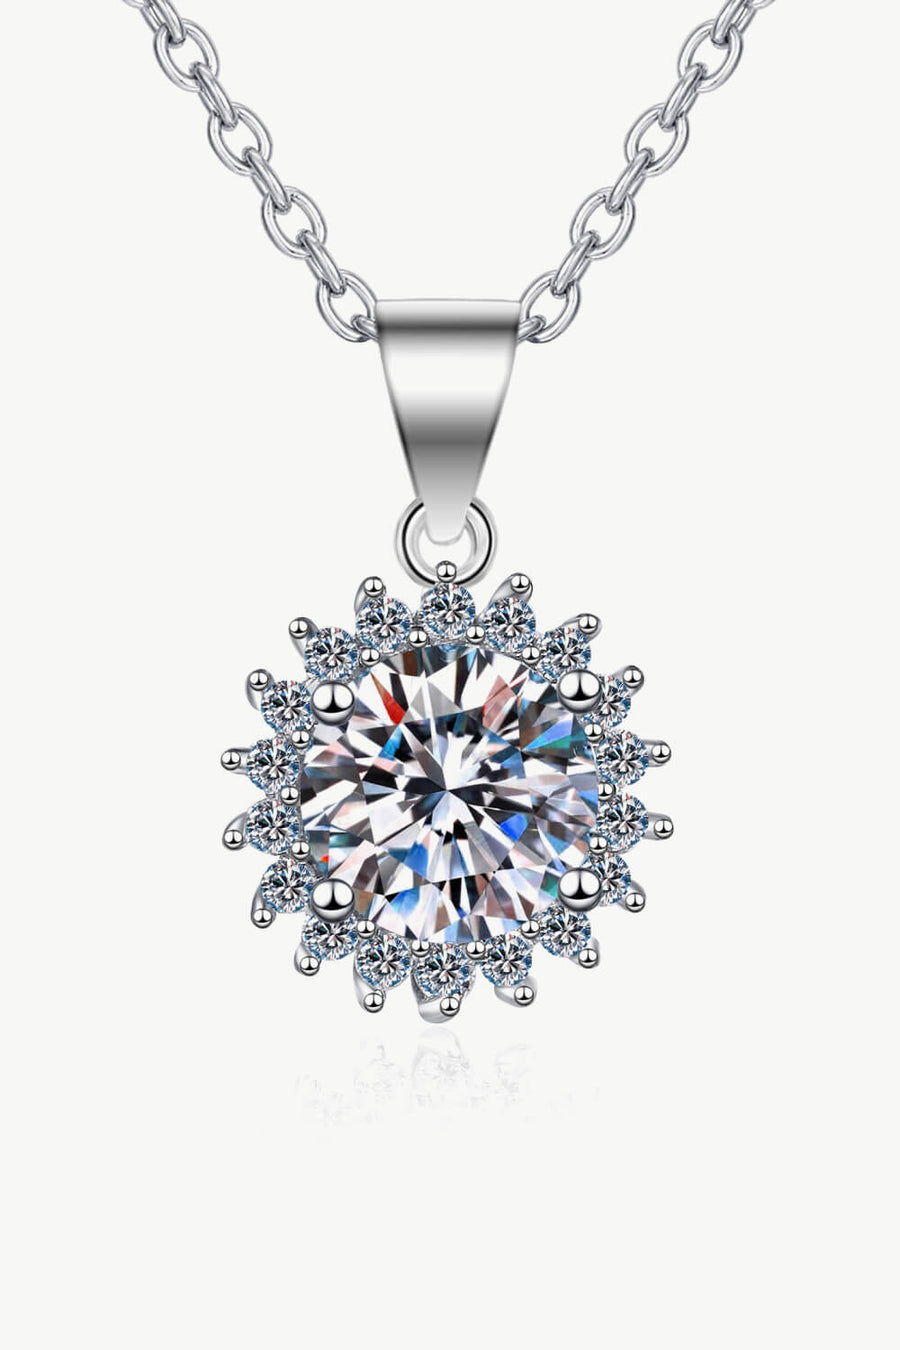 Best Diamond Necklace Jewelry Gifts for Women | 1 Carat Round Diamond Pendant Necklace | MASON New York